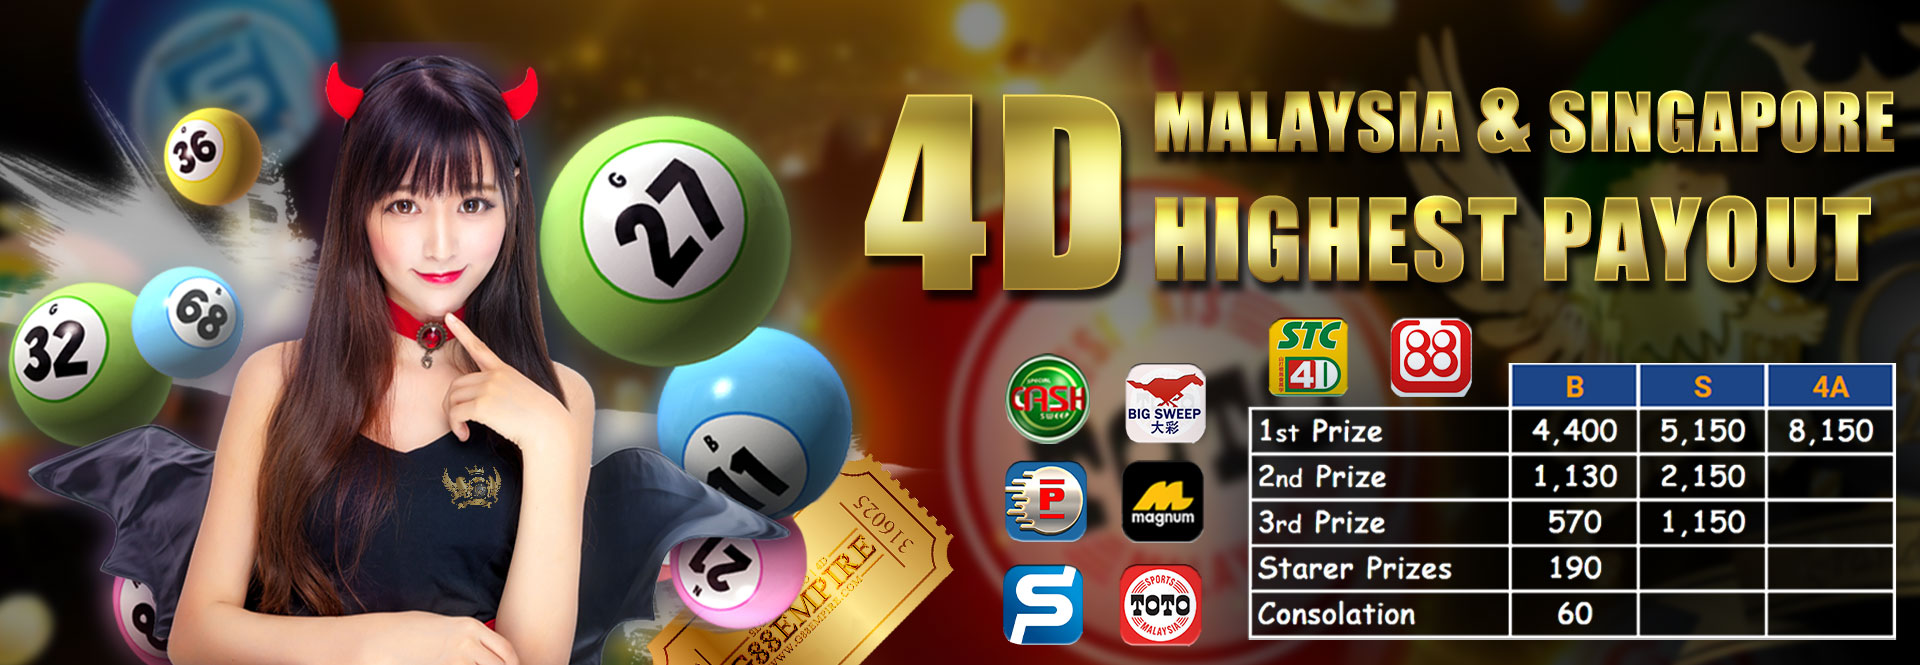 Lottery-4D-Malaysia-Singapore-Toto-Magunm-Perdana-SGPools